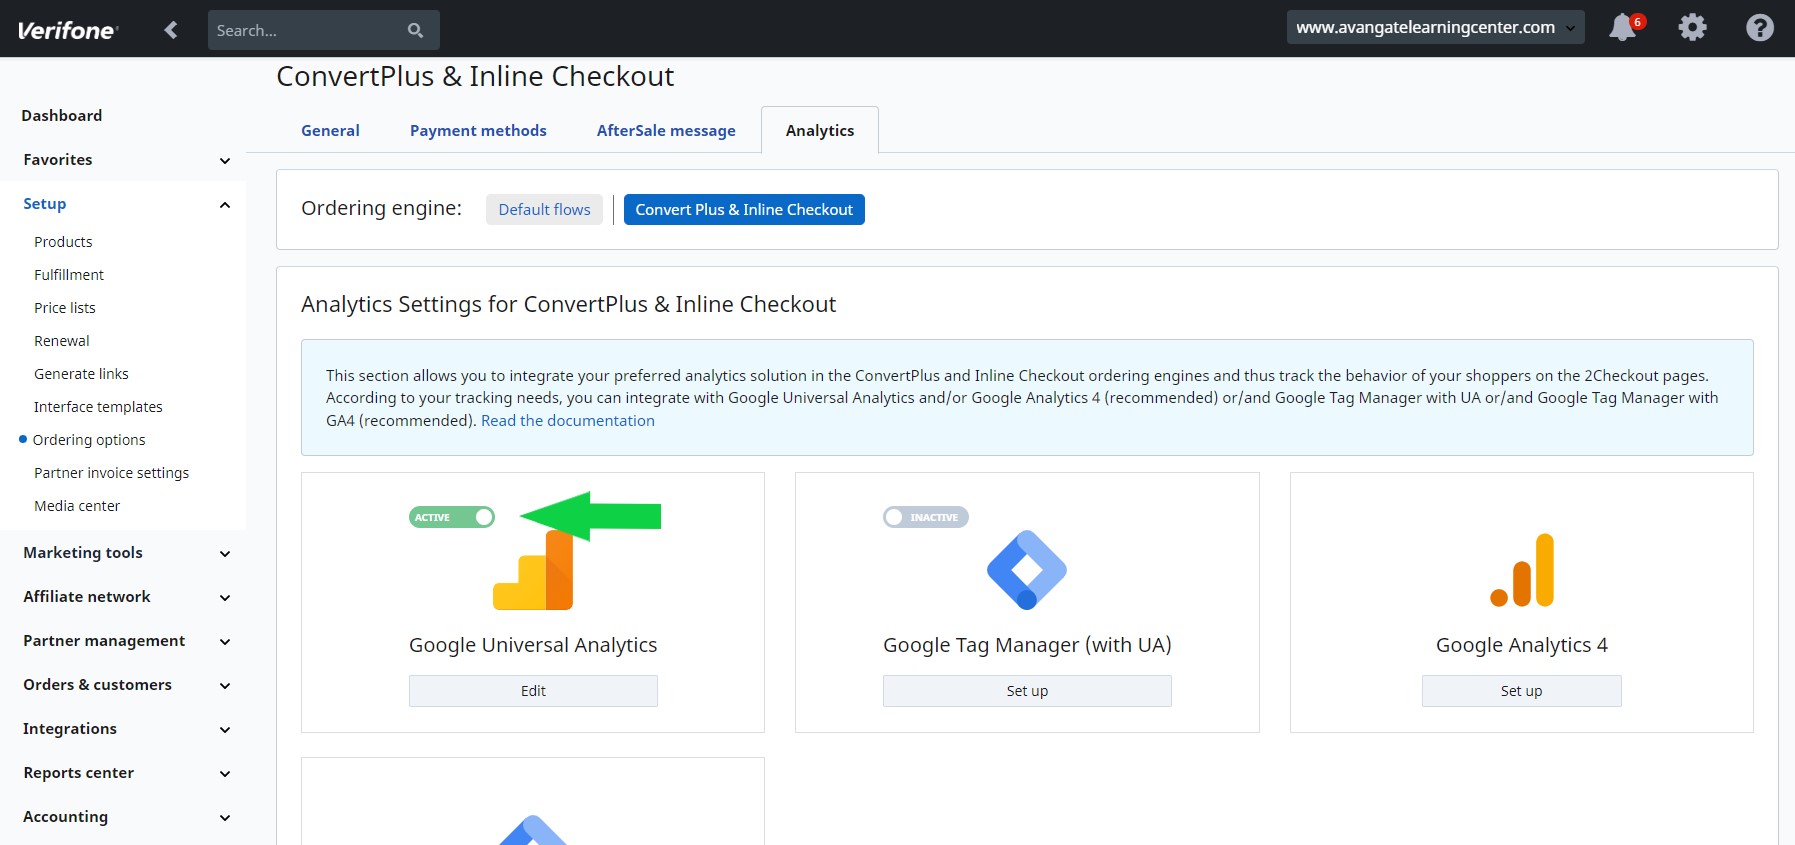 ConvertPlus & Inline Checkout Activate Google Universal Analytics